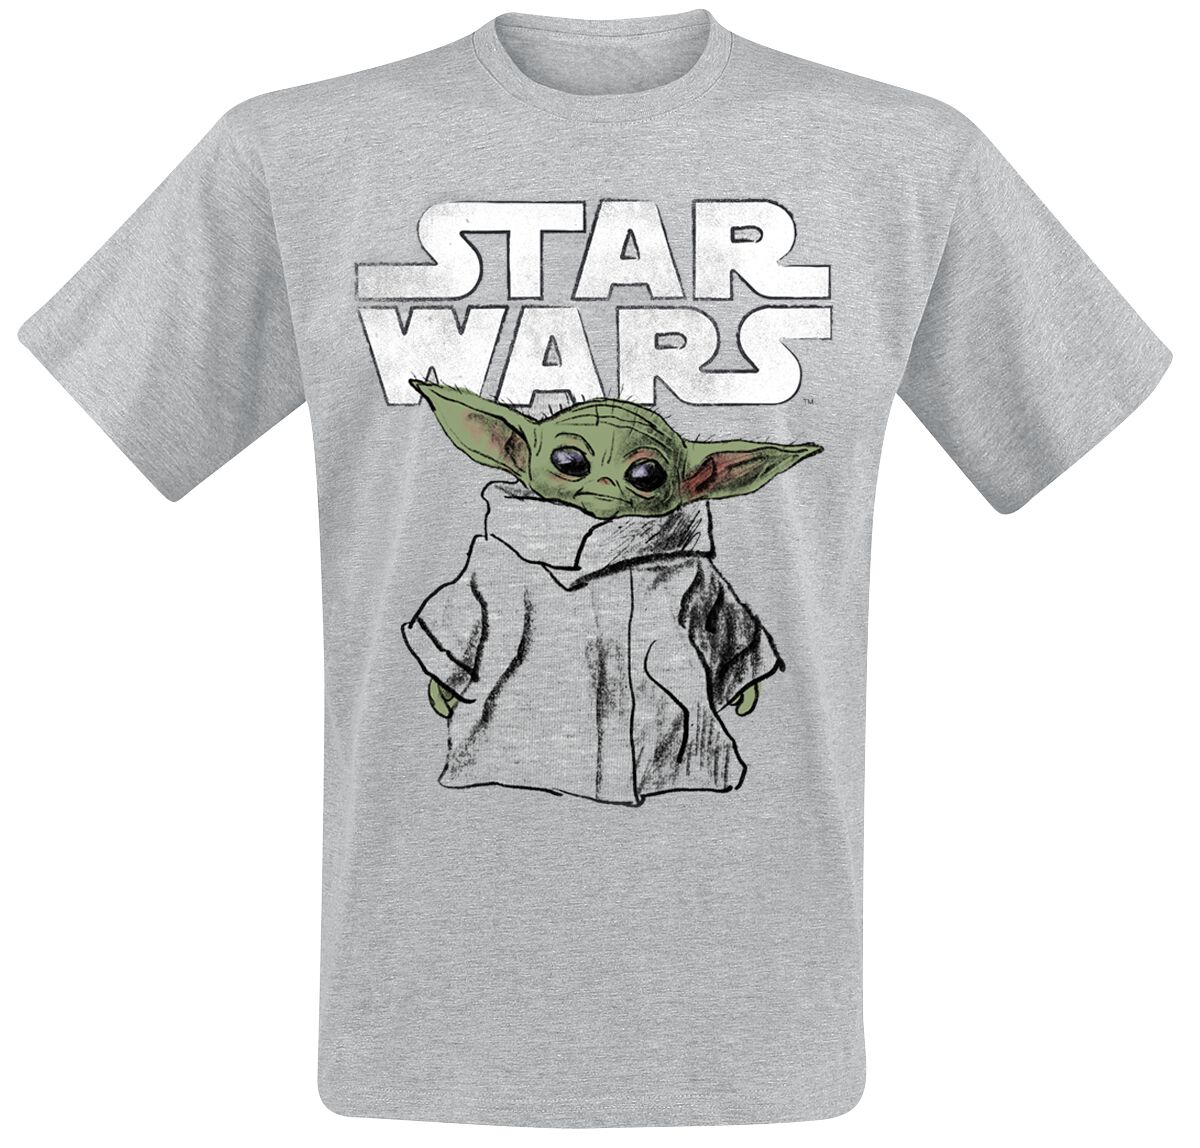 Star Wars T-Shirt - The Mandalorian - Grogu - Sketch - S bis 4XL - für Männer - Größe 3XL - grau meliert  - Lizenzierter Fanartikel